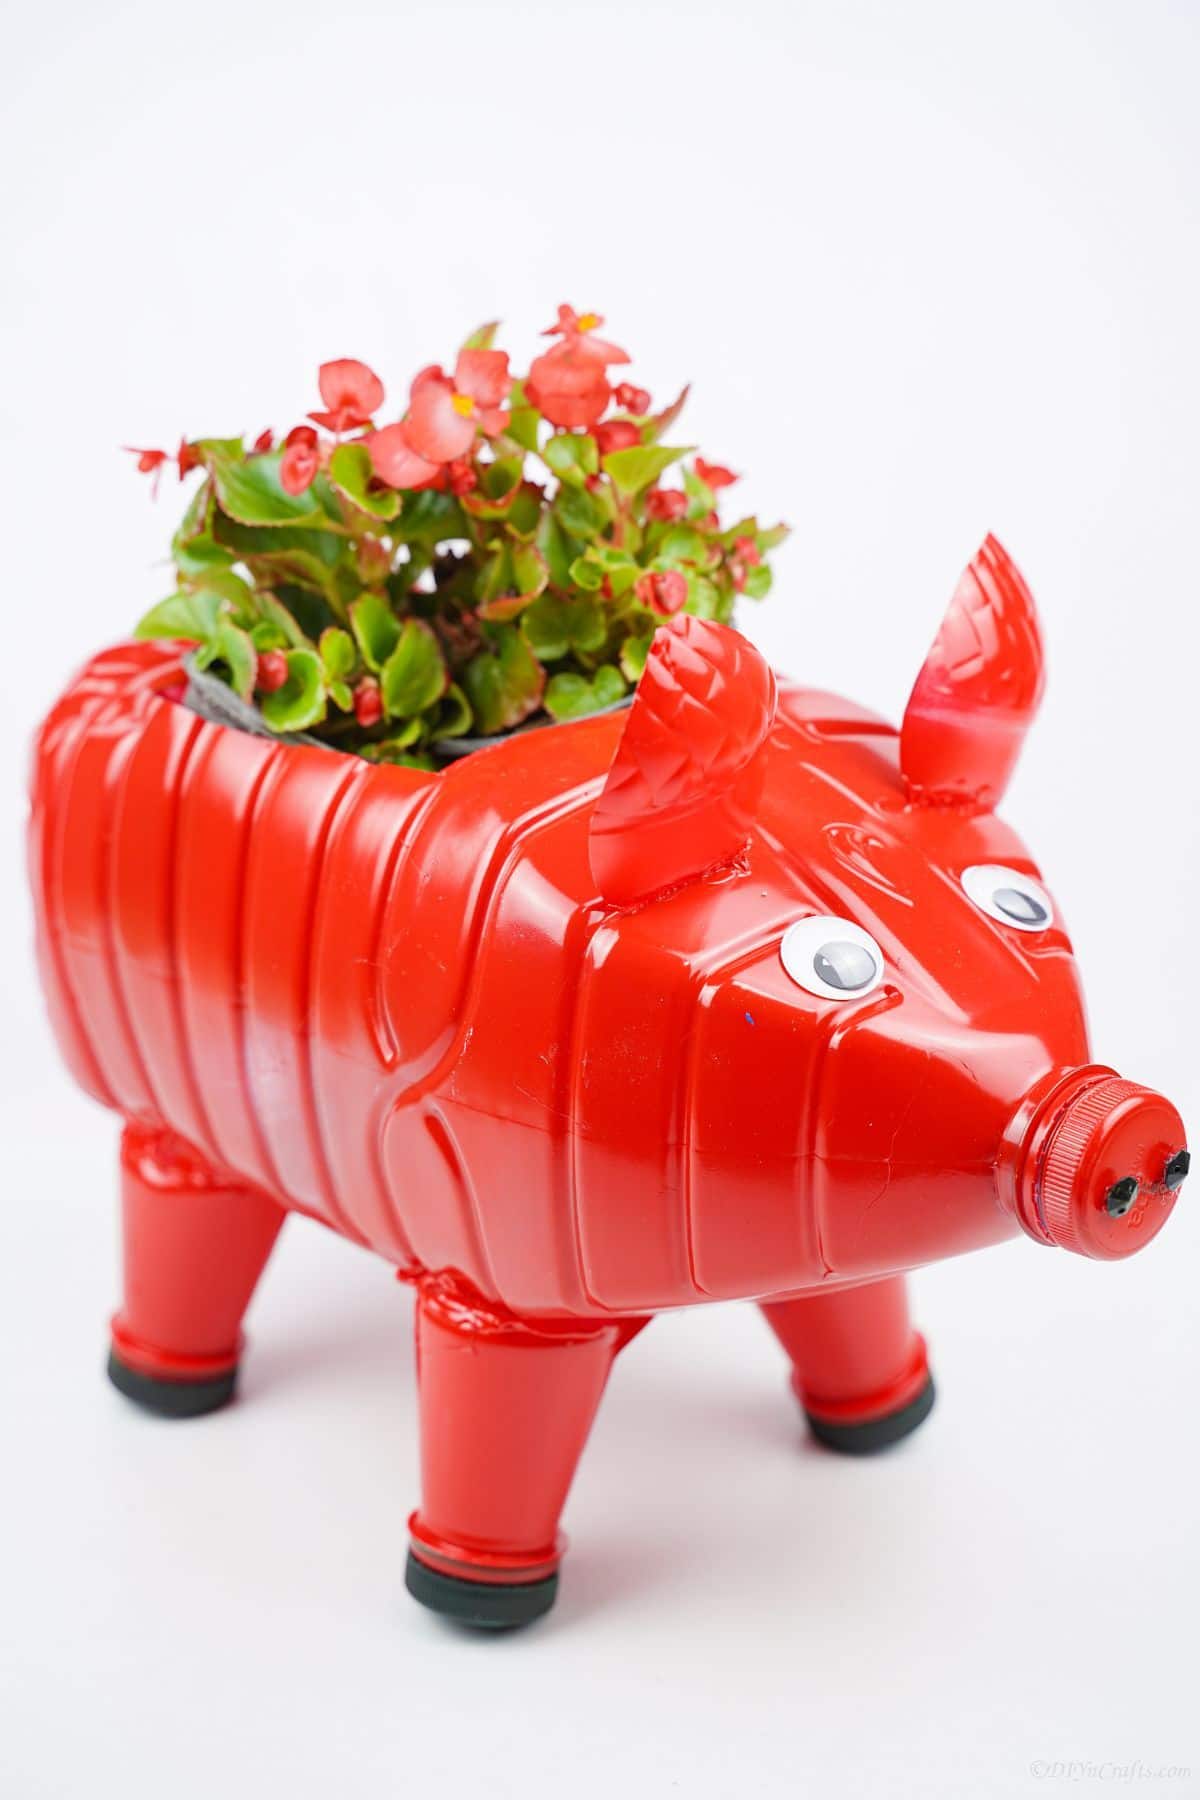 red plastic bottle planter in shape of pig on white table